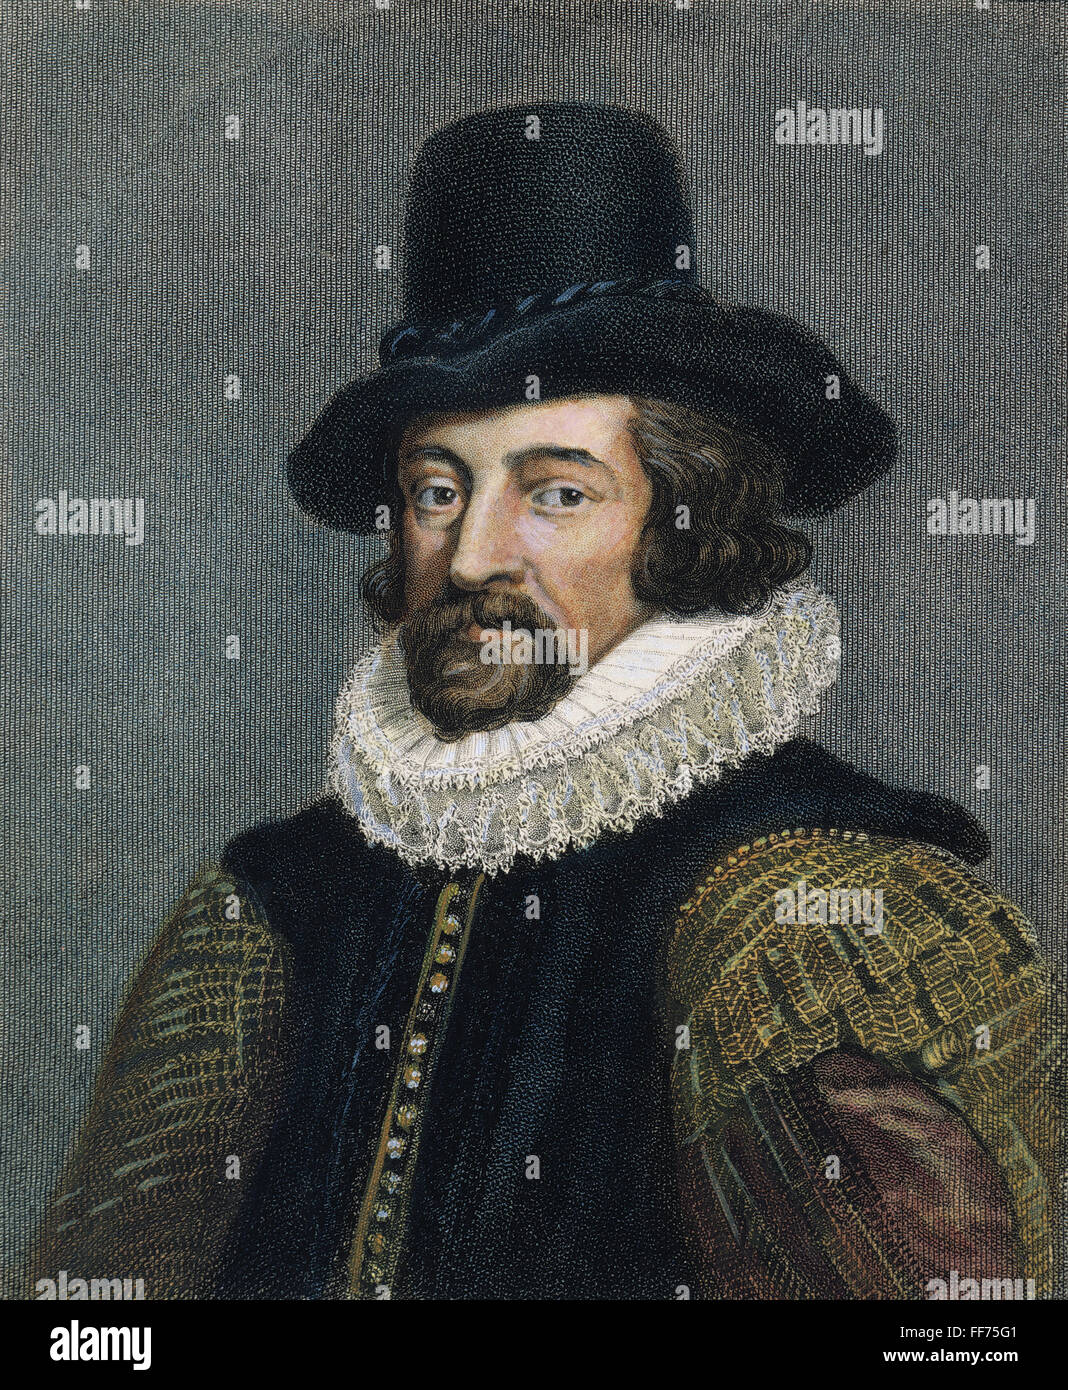 SIR FRANCIS BACON (1561-1626). English philosopher, statesman, and author. Steel engraving, English, 19th century. Stock Photo